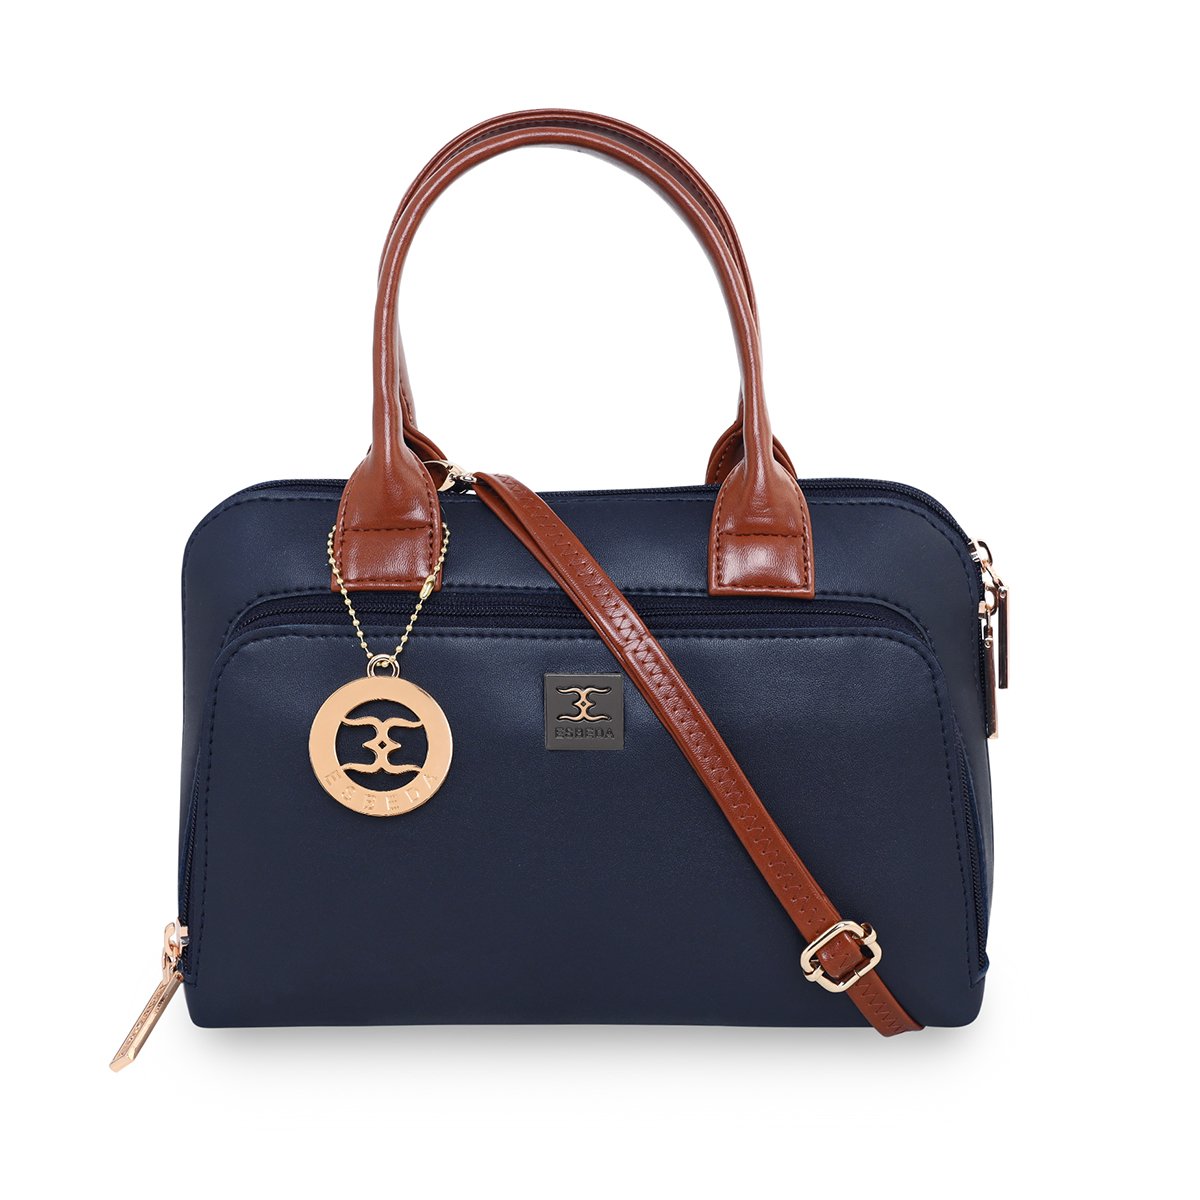 Buy ESBEDA Green Color Solid Zip Over Tiny Handbag For Women at Amazon.in